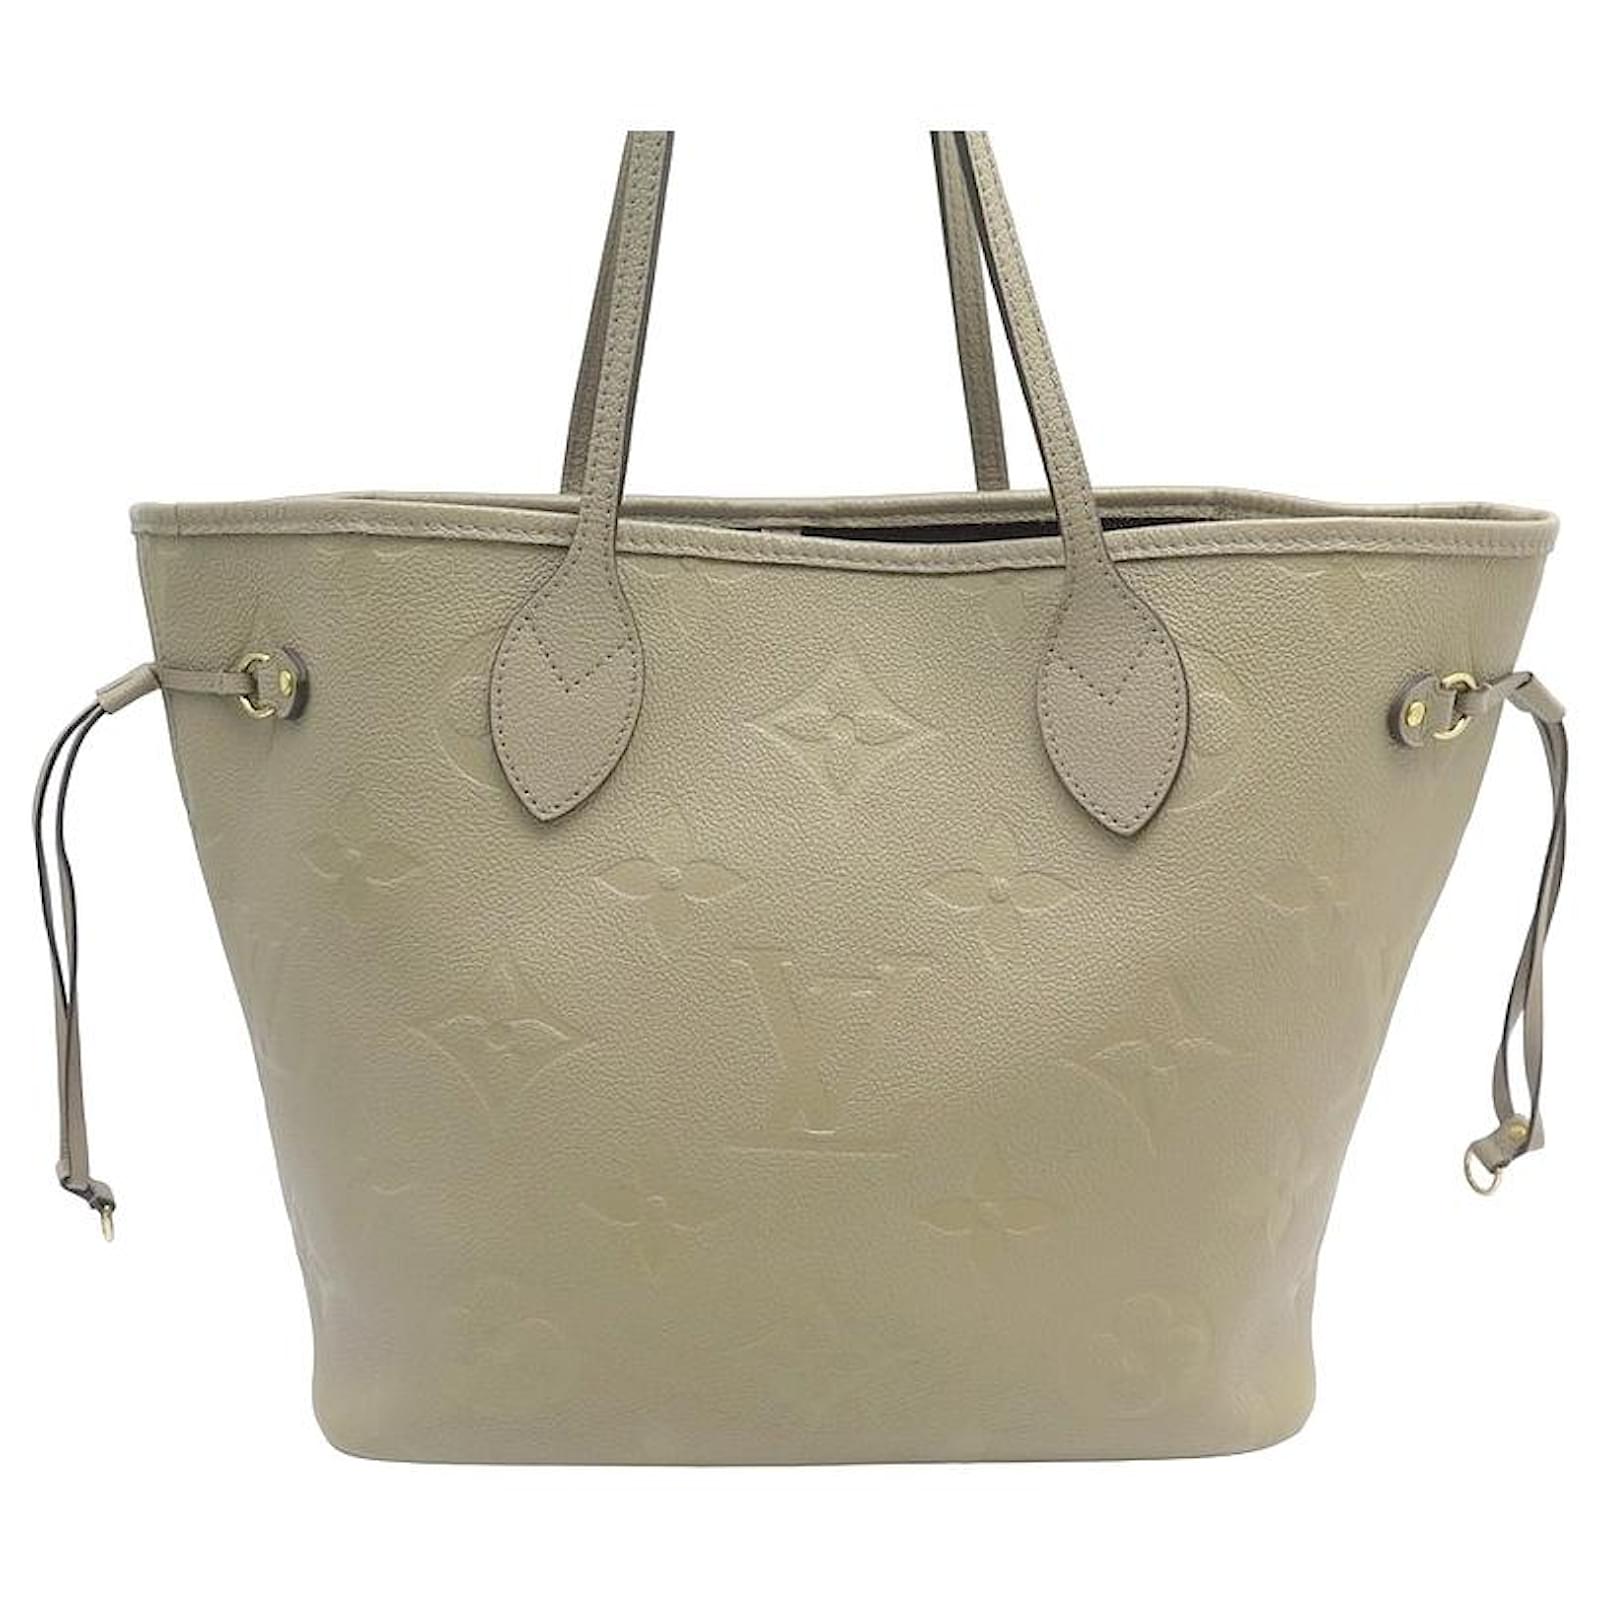 Louis Vuitton Neverfull MM Monogram Bags Handbags Purse (Beige) :  Amazon.in: Shoes & Handbags